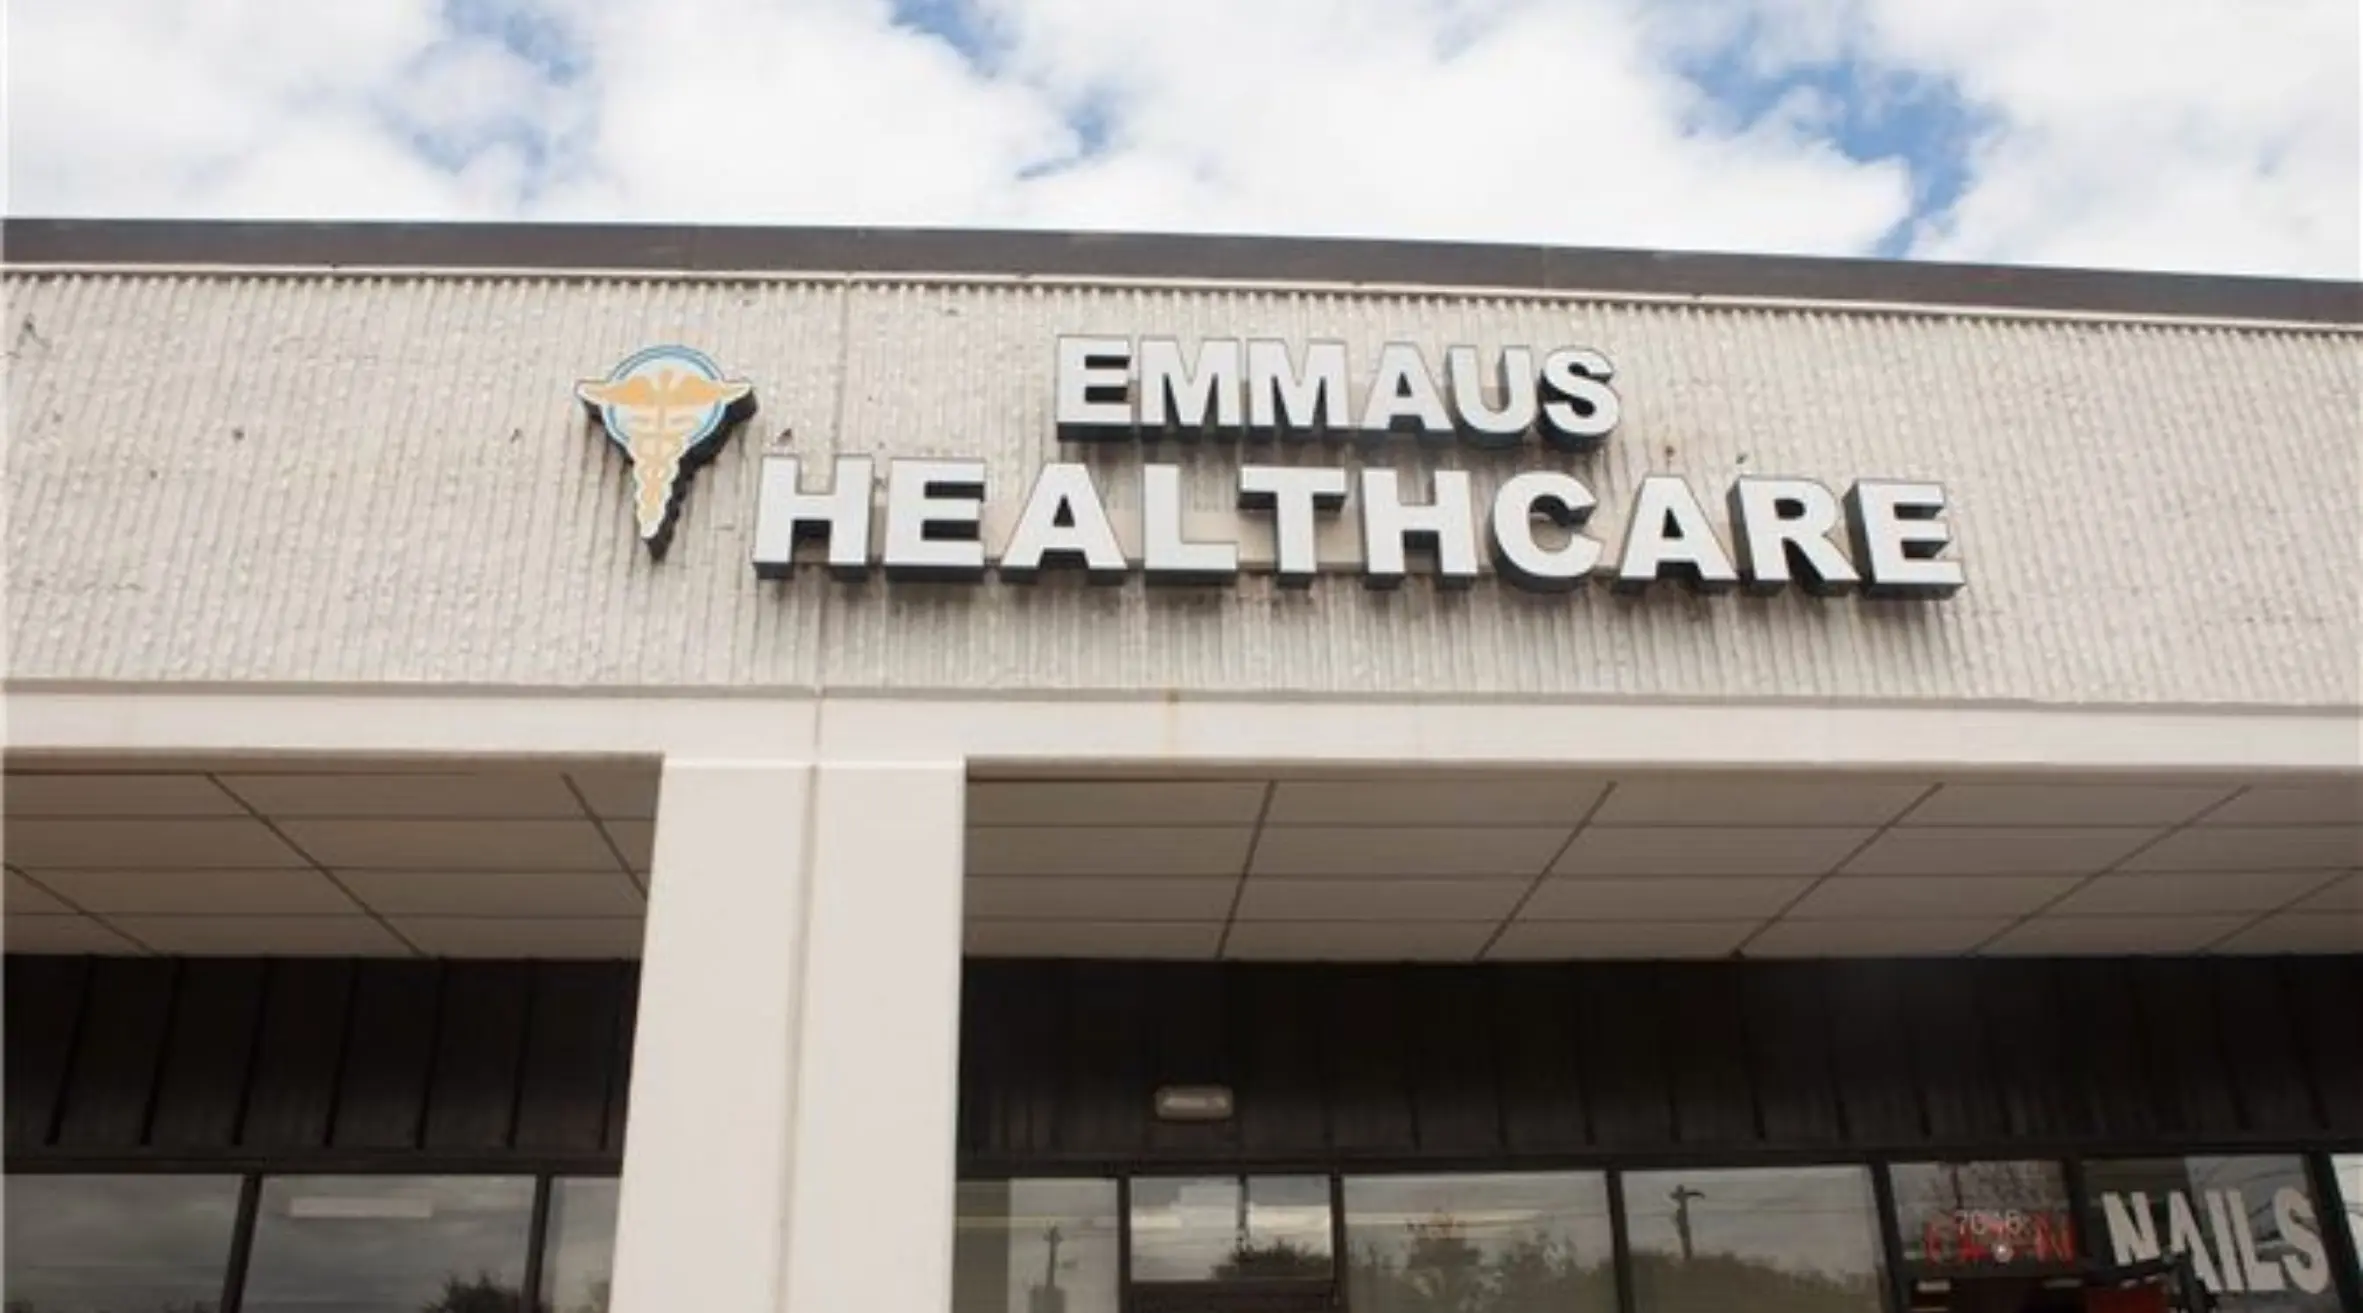 National MS Centre joins Emmaus Healthcare, plans new hospital